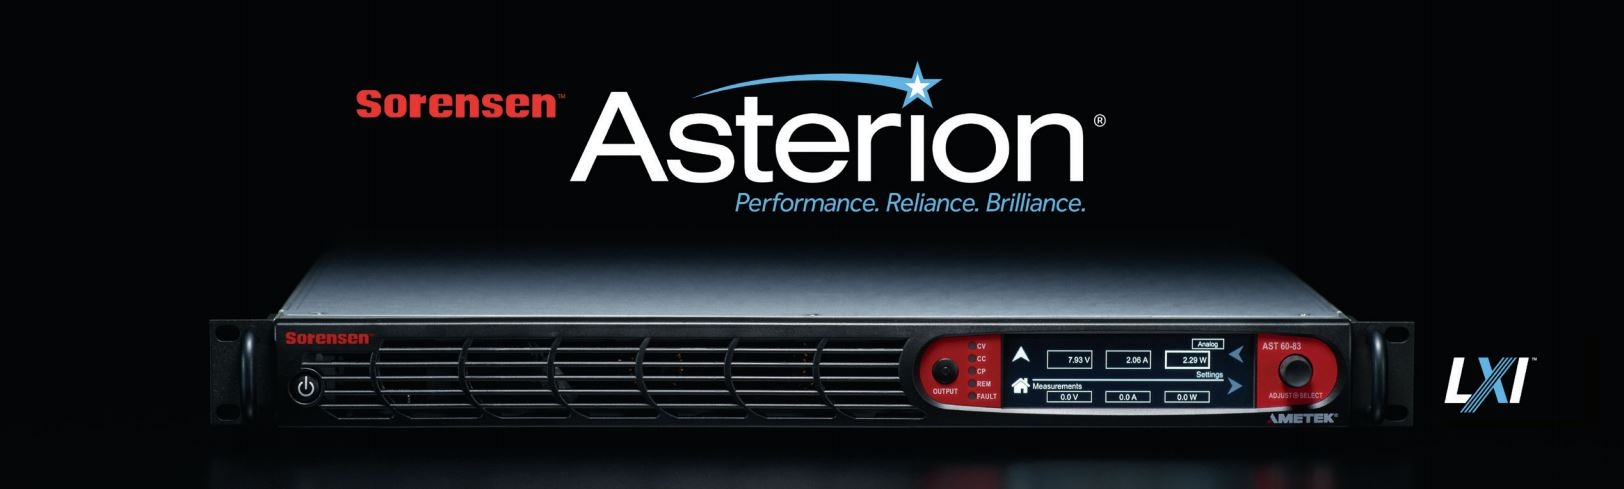 Sorensen Asterion DC Series - High Performance Programmable DC Power Supply